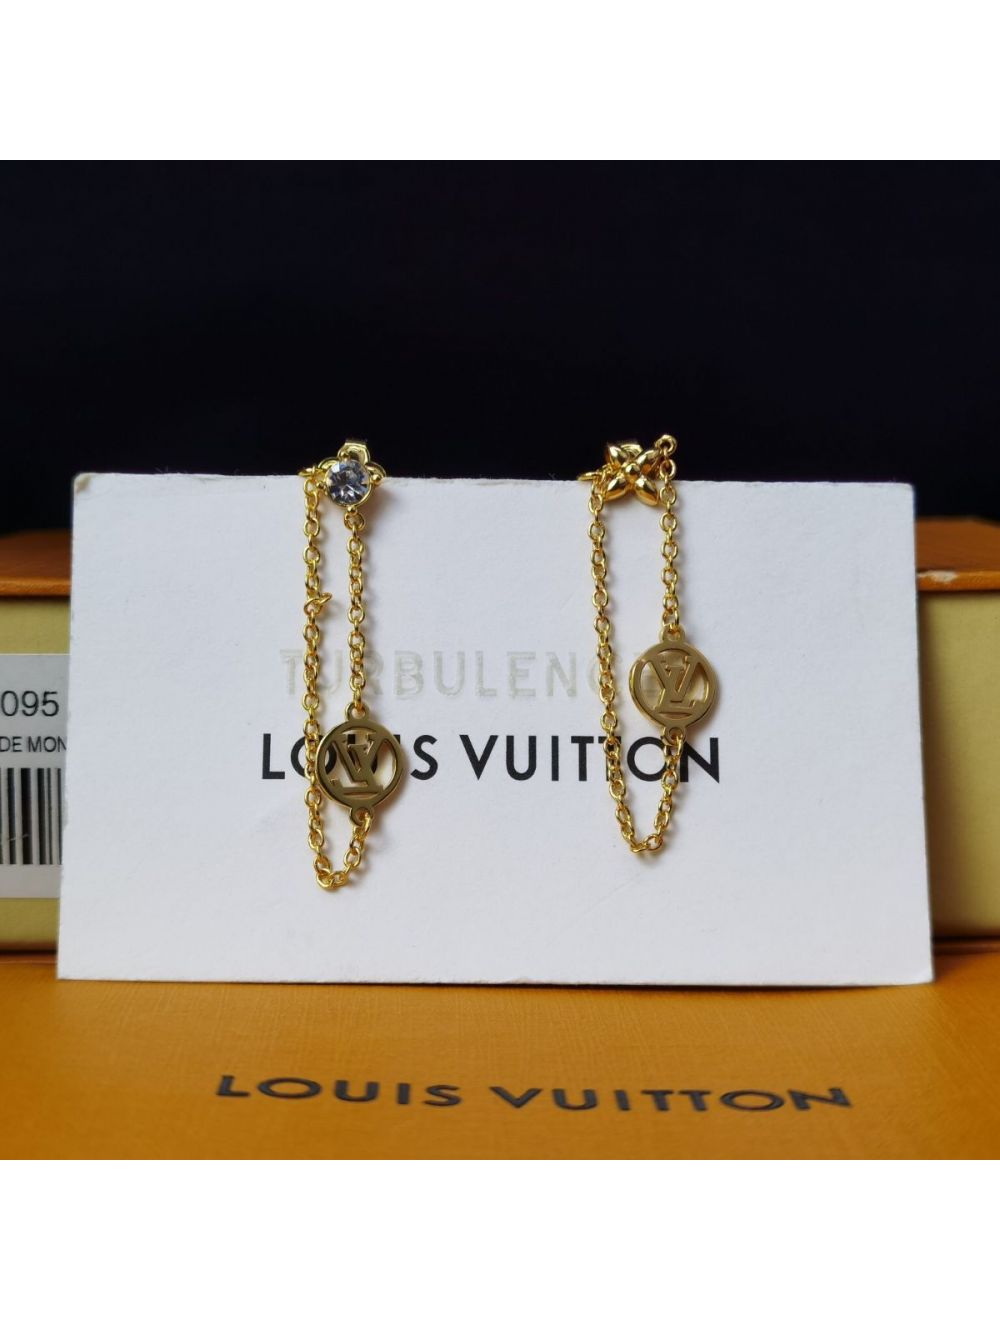 Louis Vuitton Petit louis earrings (M00390)  Earrings, Matching necklaces,  Women accessories jewelry